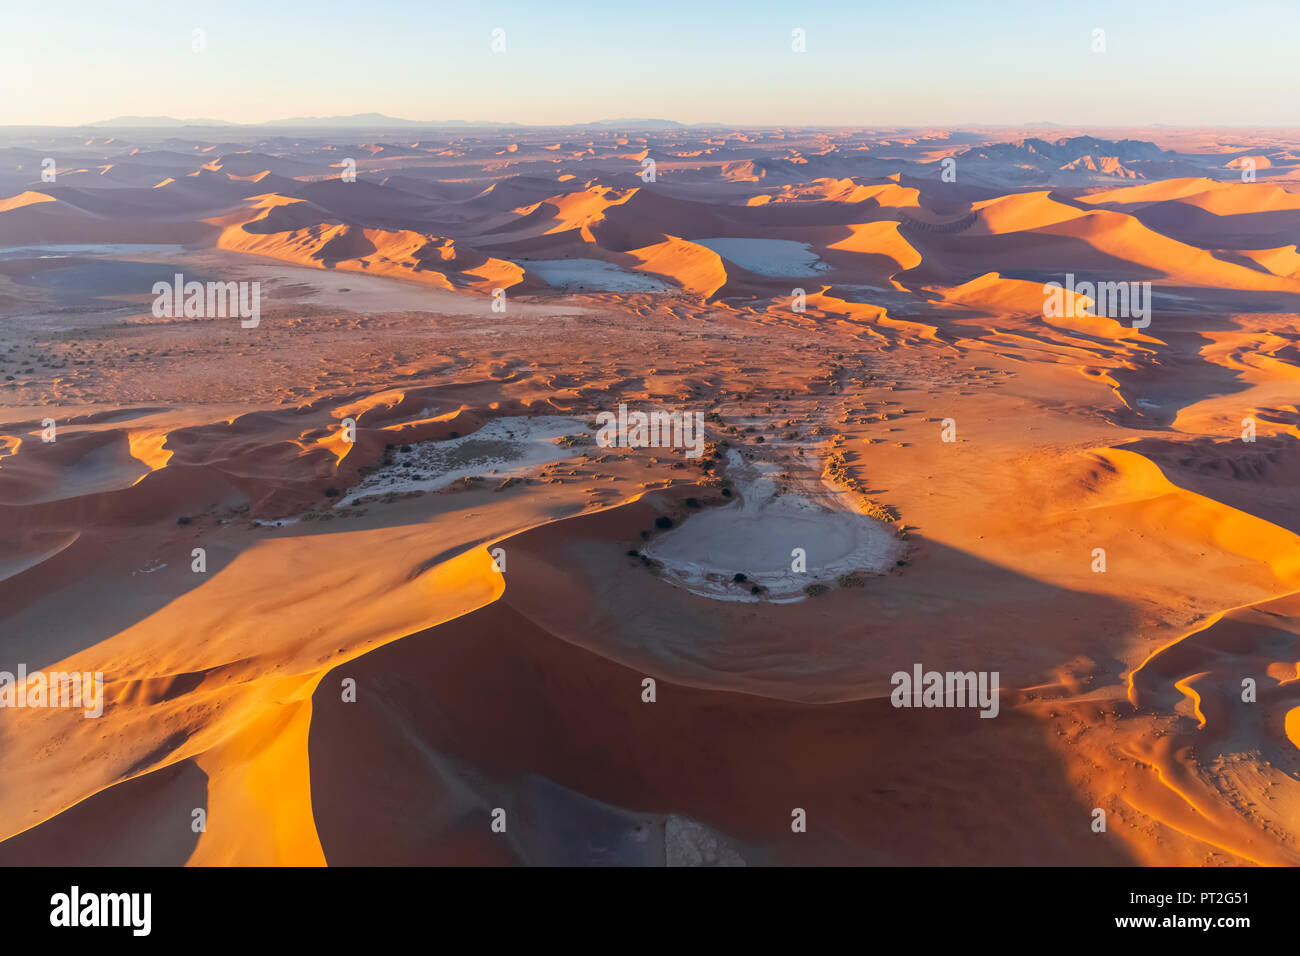 Africa, Namibia, Namib desert, Namib-Naukluft National Park, Aerial view of desert dunes, Nara Vlei and Sossus Vlei and 'Big Mama', Dead Vlei and 'Big Stock Photo